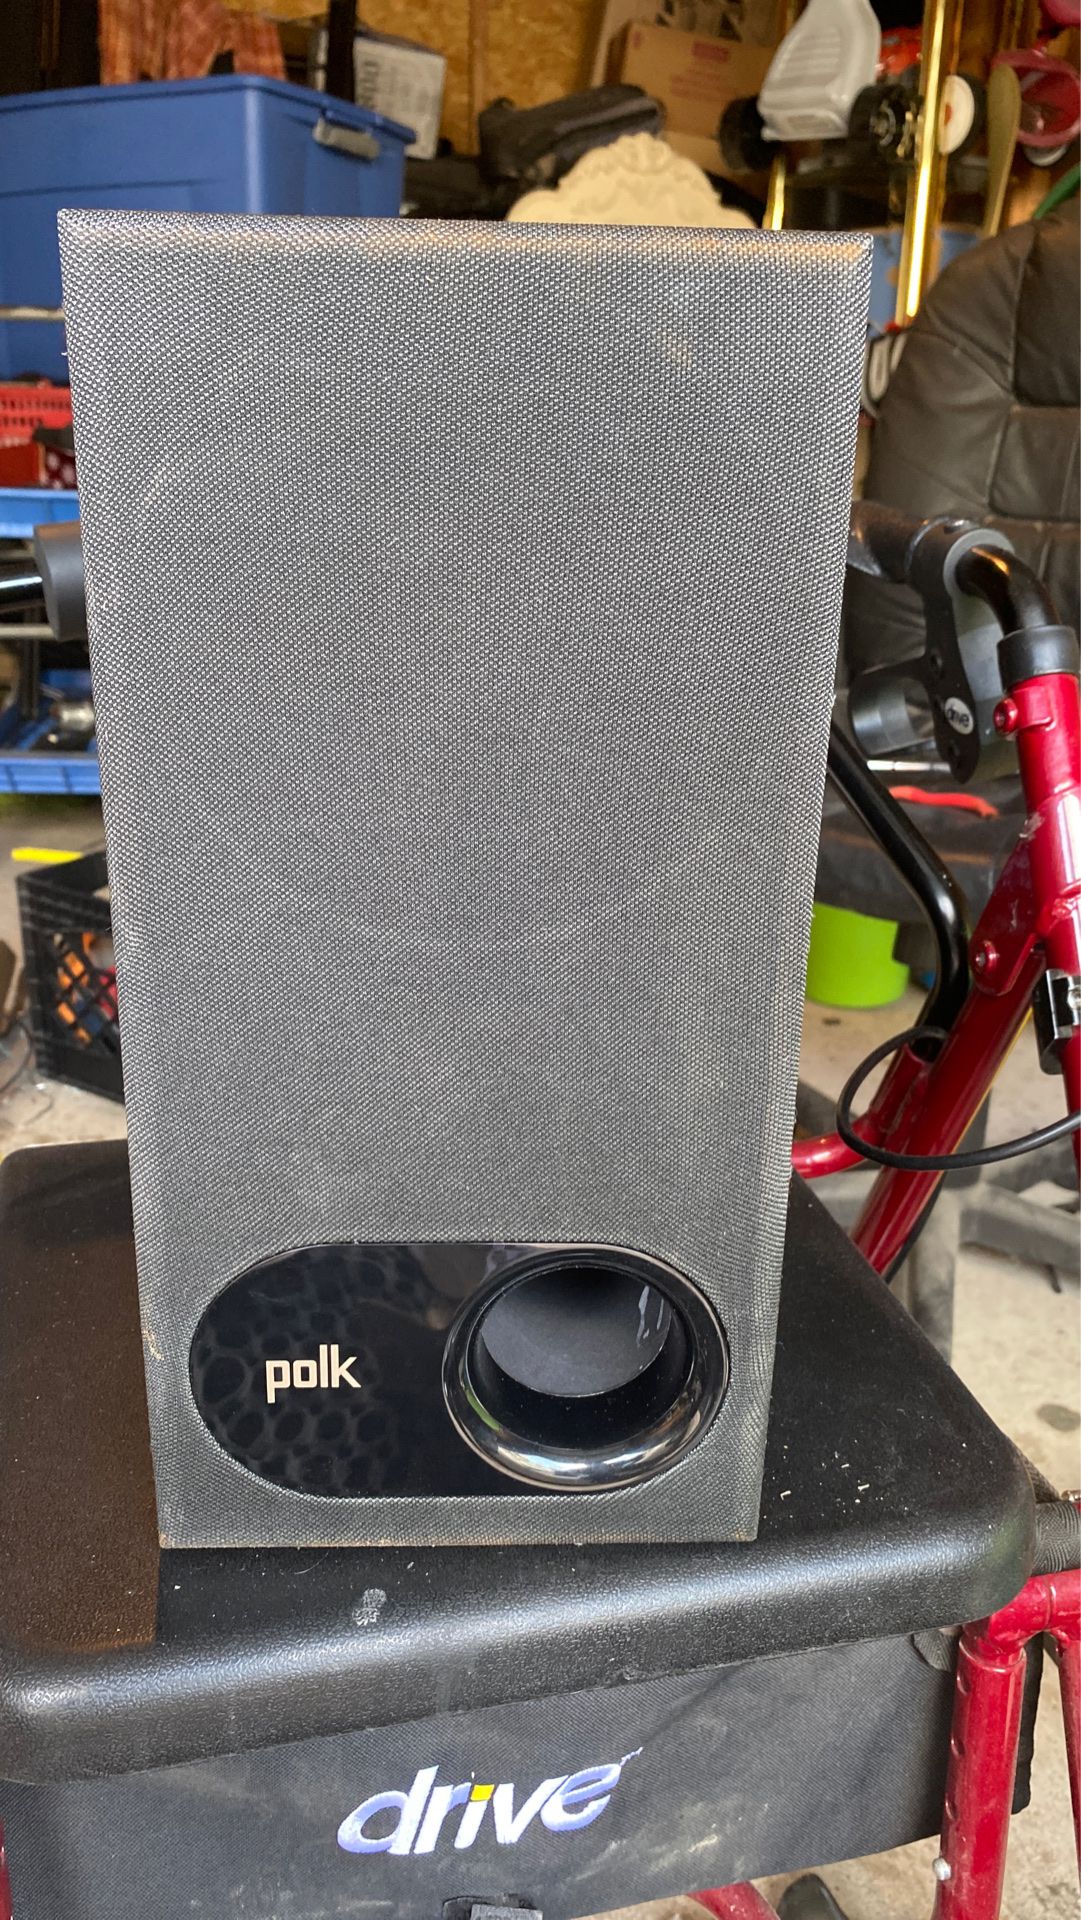 Polk audio wireless subwoofer